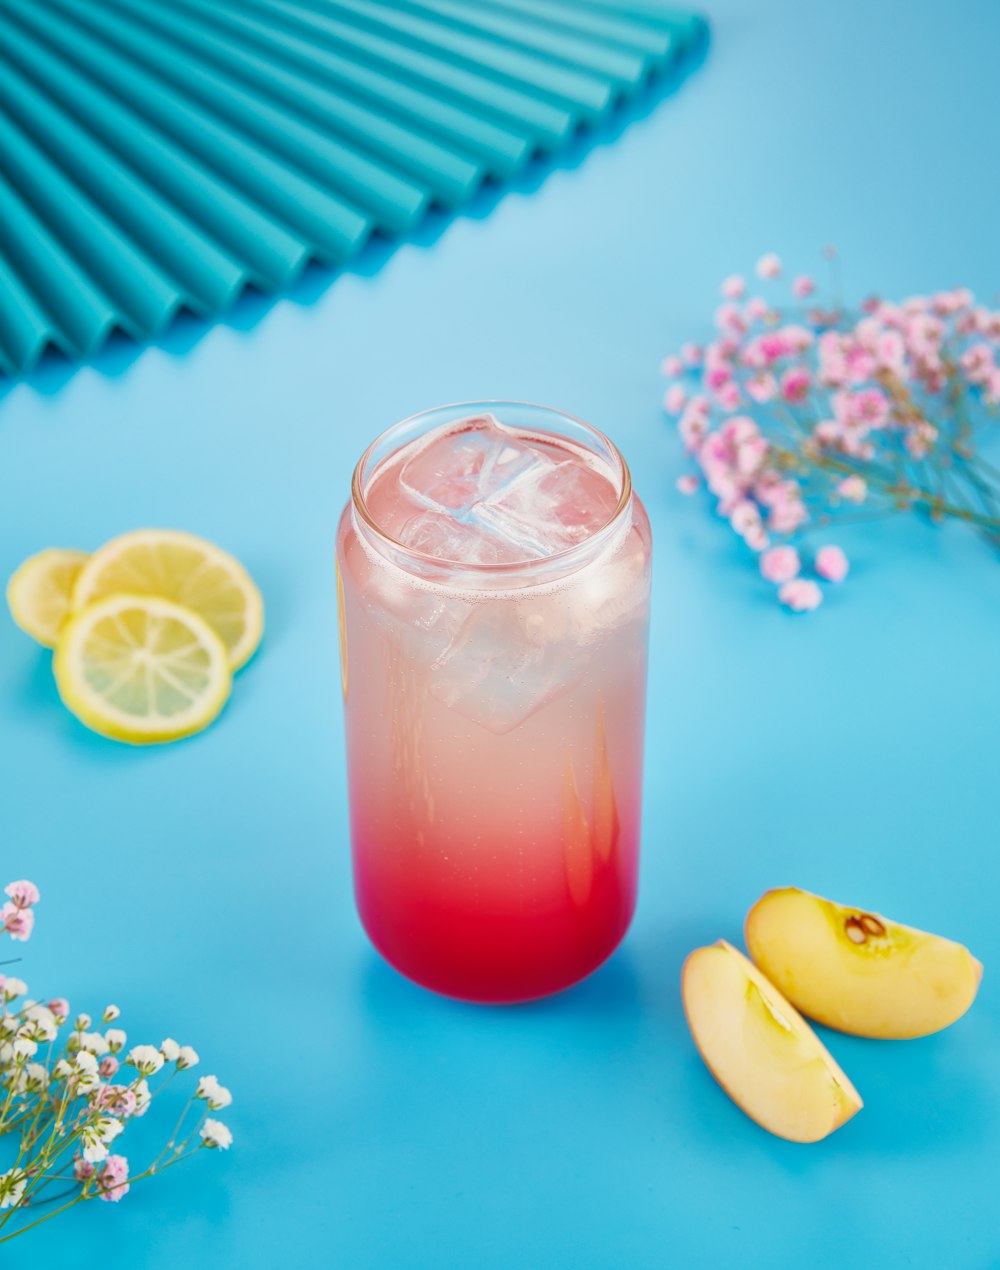 a glass of lemonade next to sliced lemons and flowers